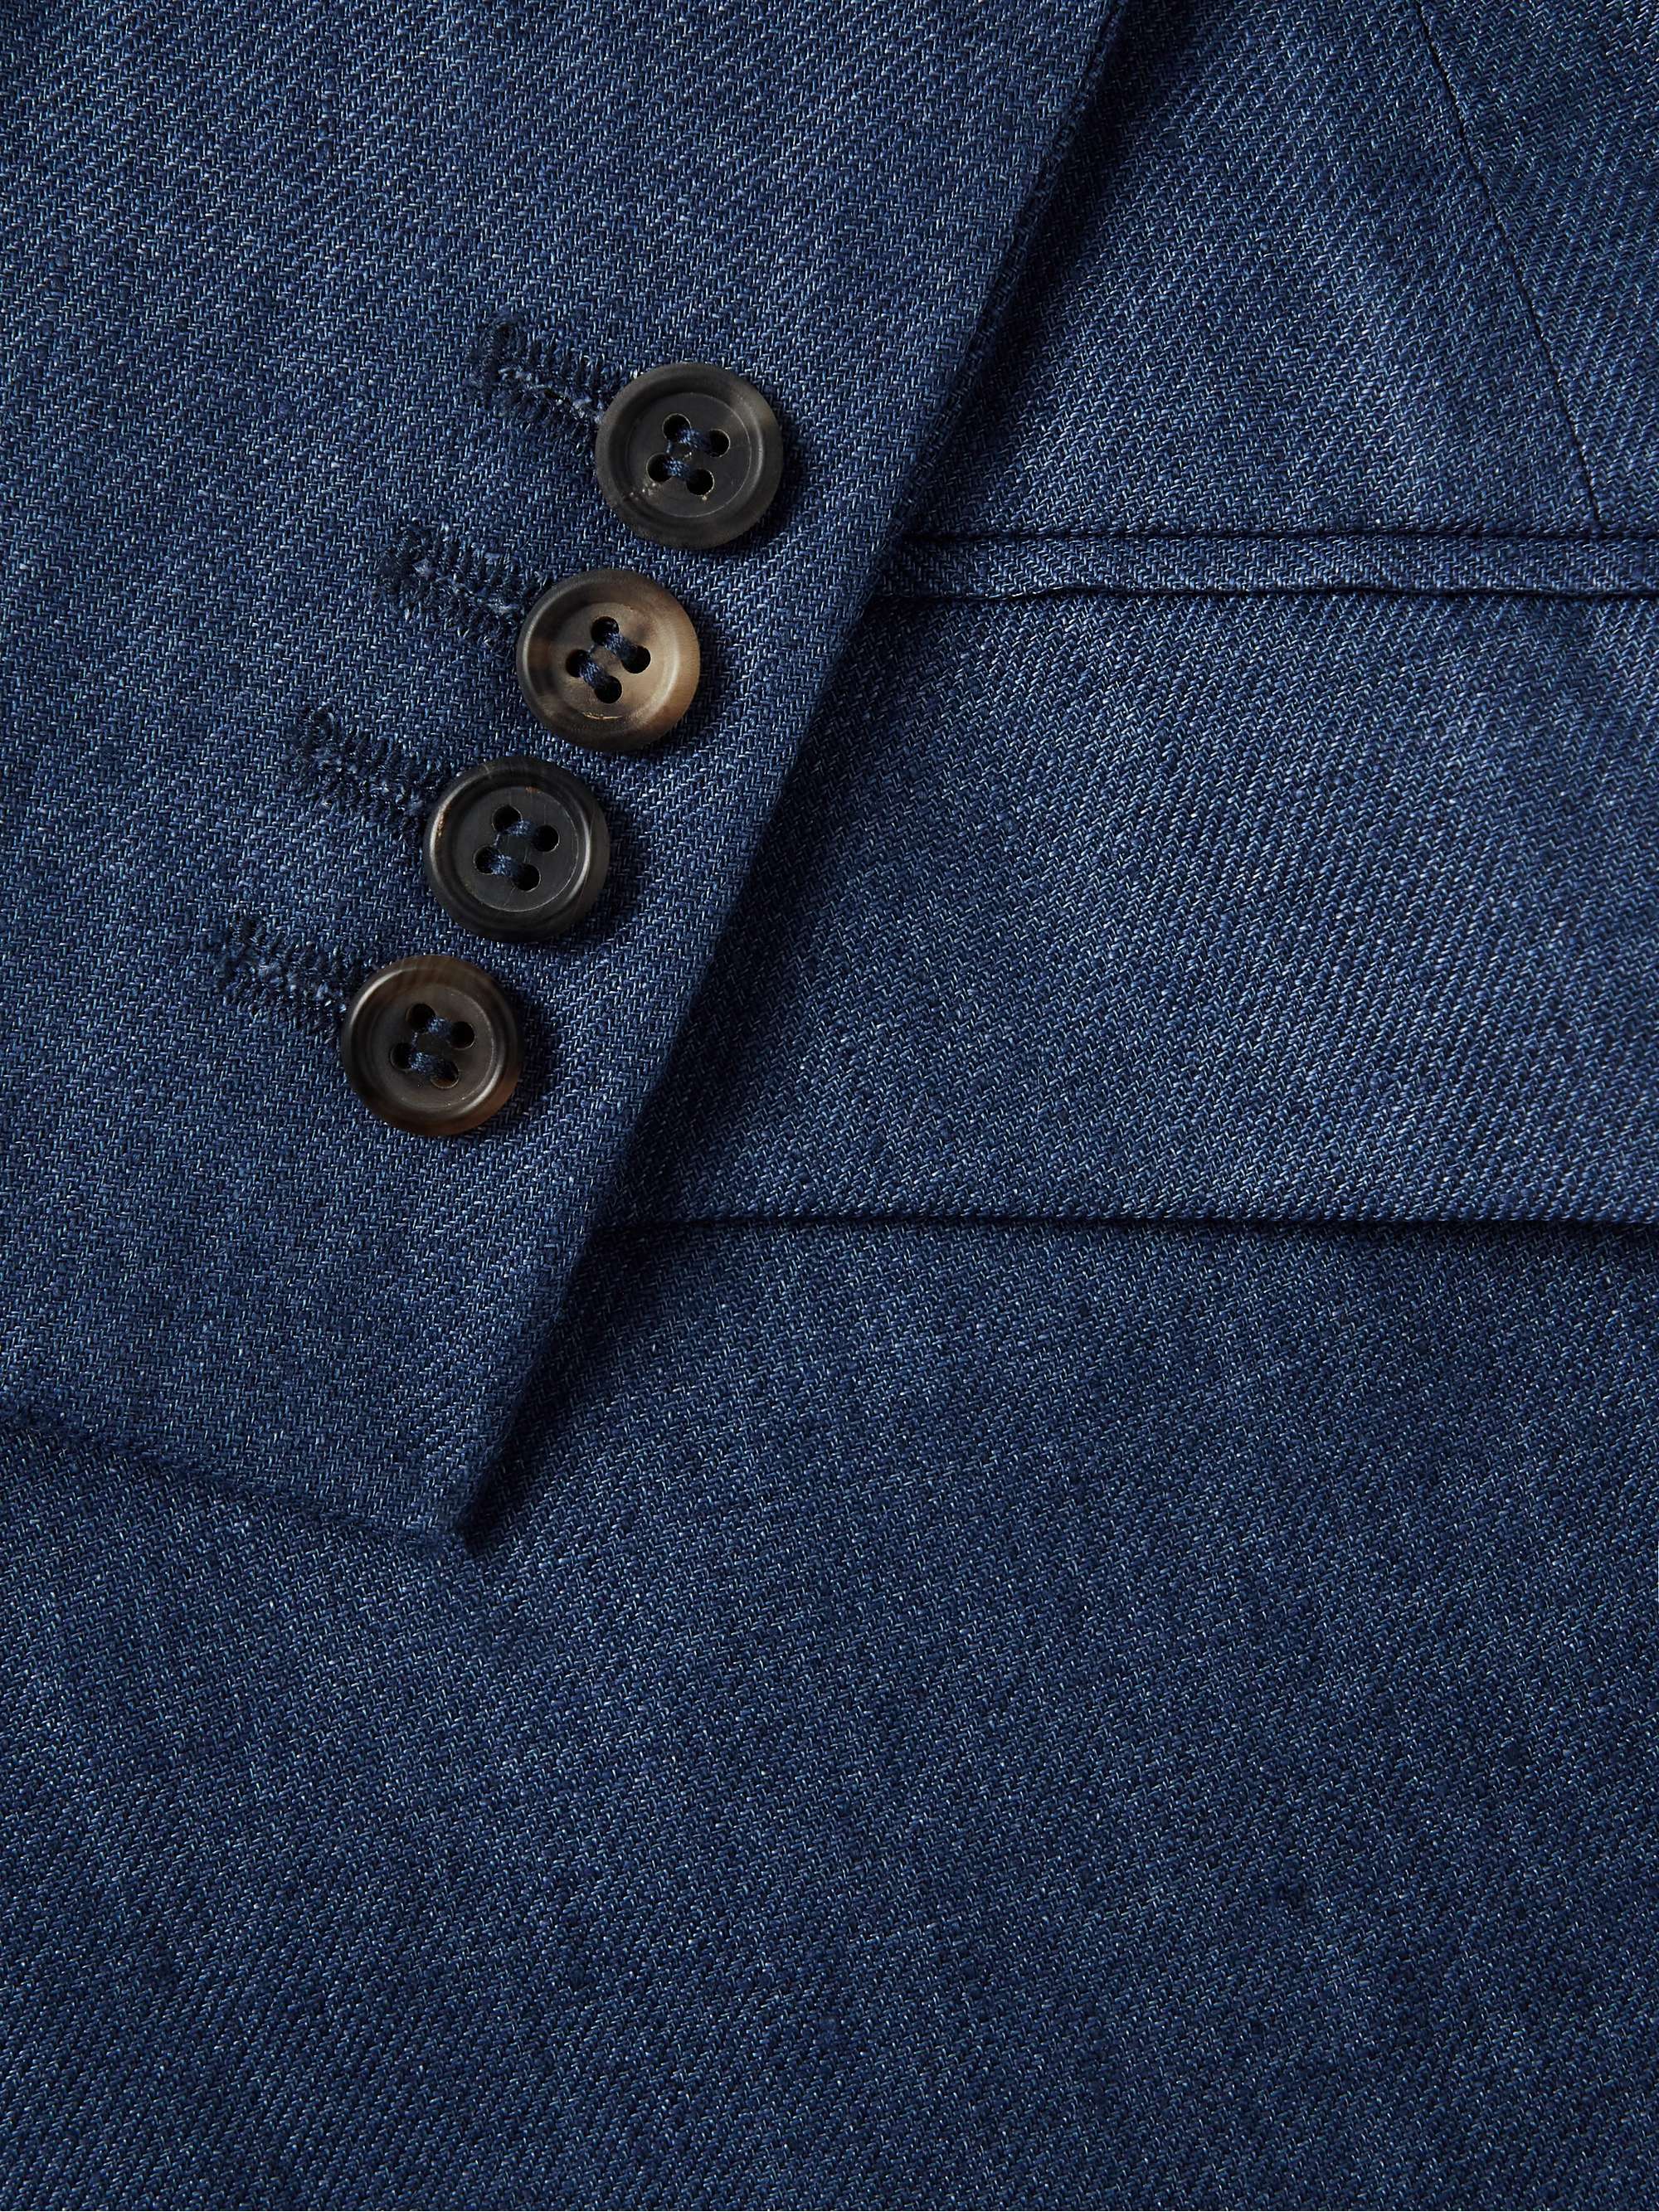 FAVOURBROOK Ebury Slim-Fit Herringbone Cotton and Linen-Blend Suit Jacket